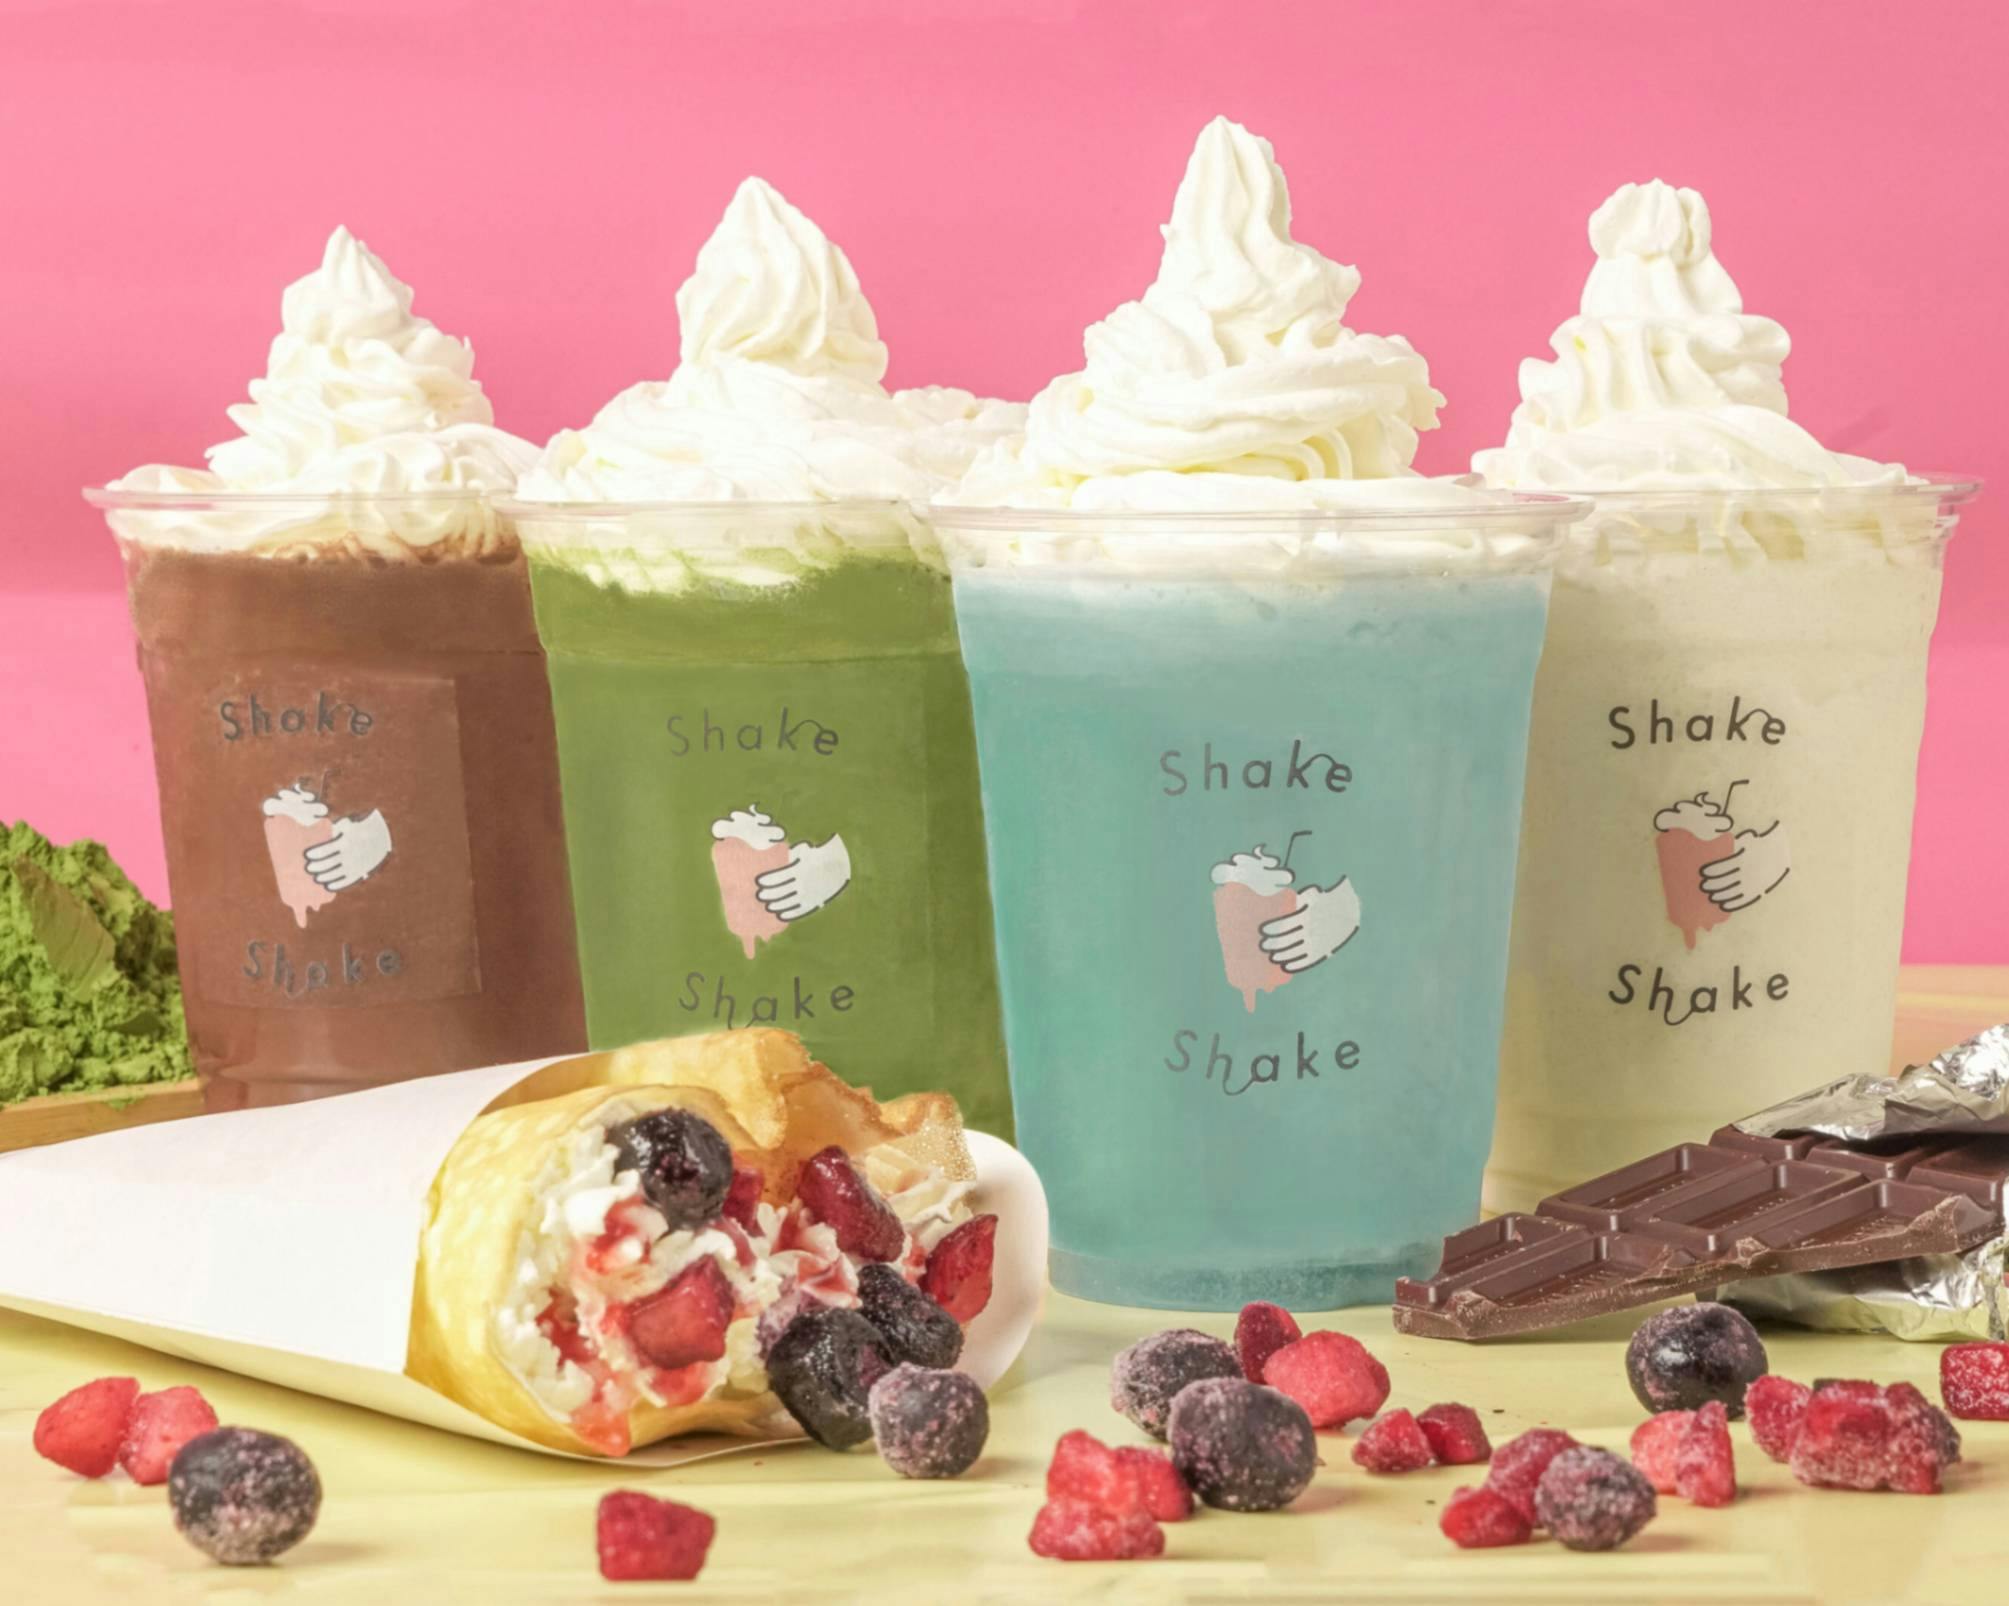 Shake Shakeのブランド画像